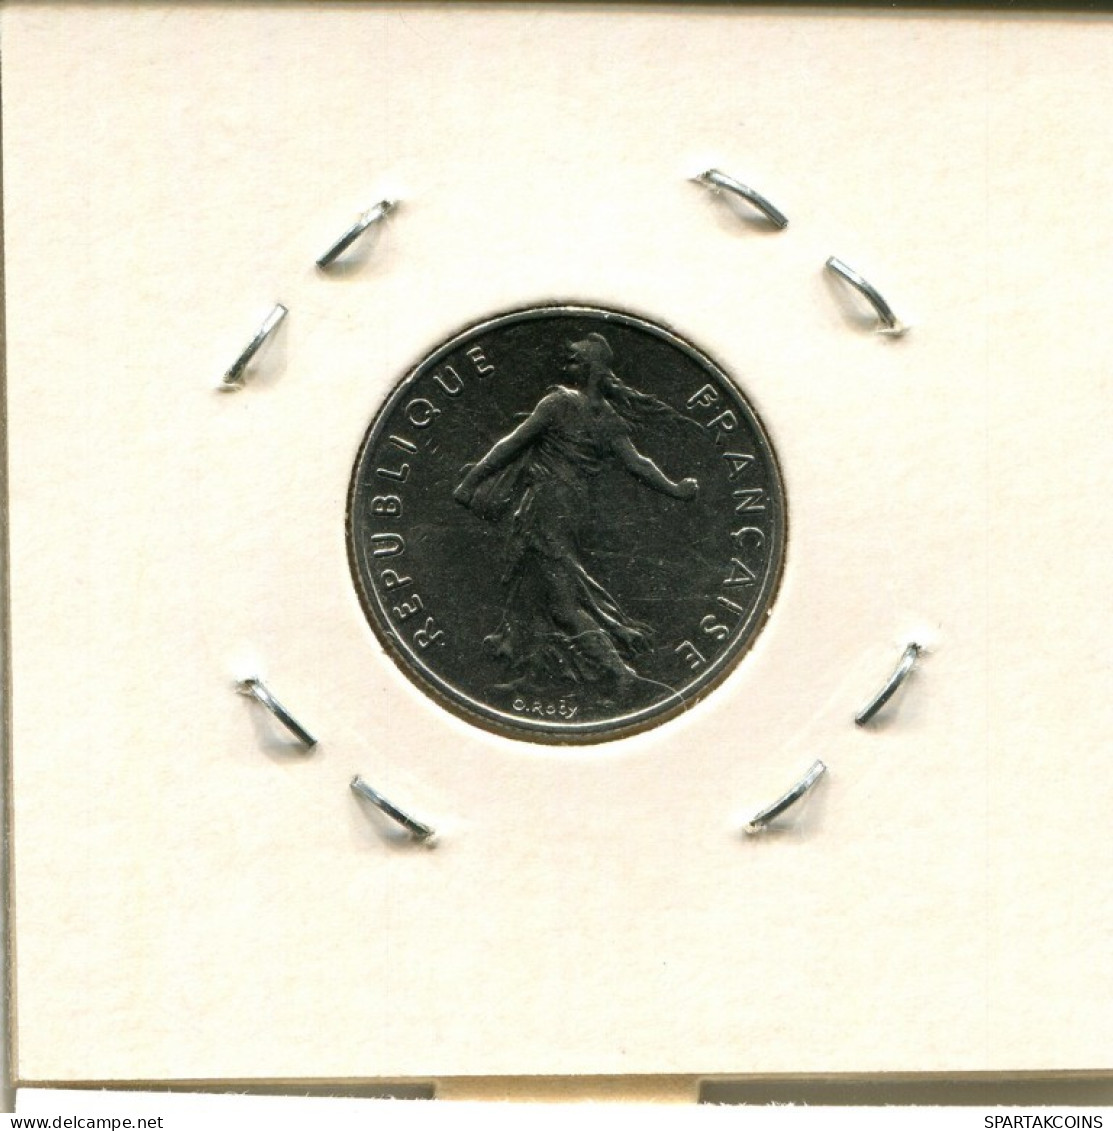 1/2 FRANC 1984 FRANCE Coin French Coin #AM252.U.A - 1/2 Franc